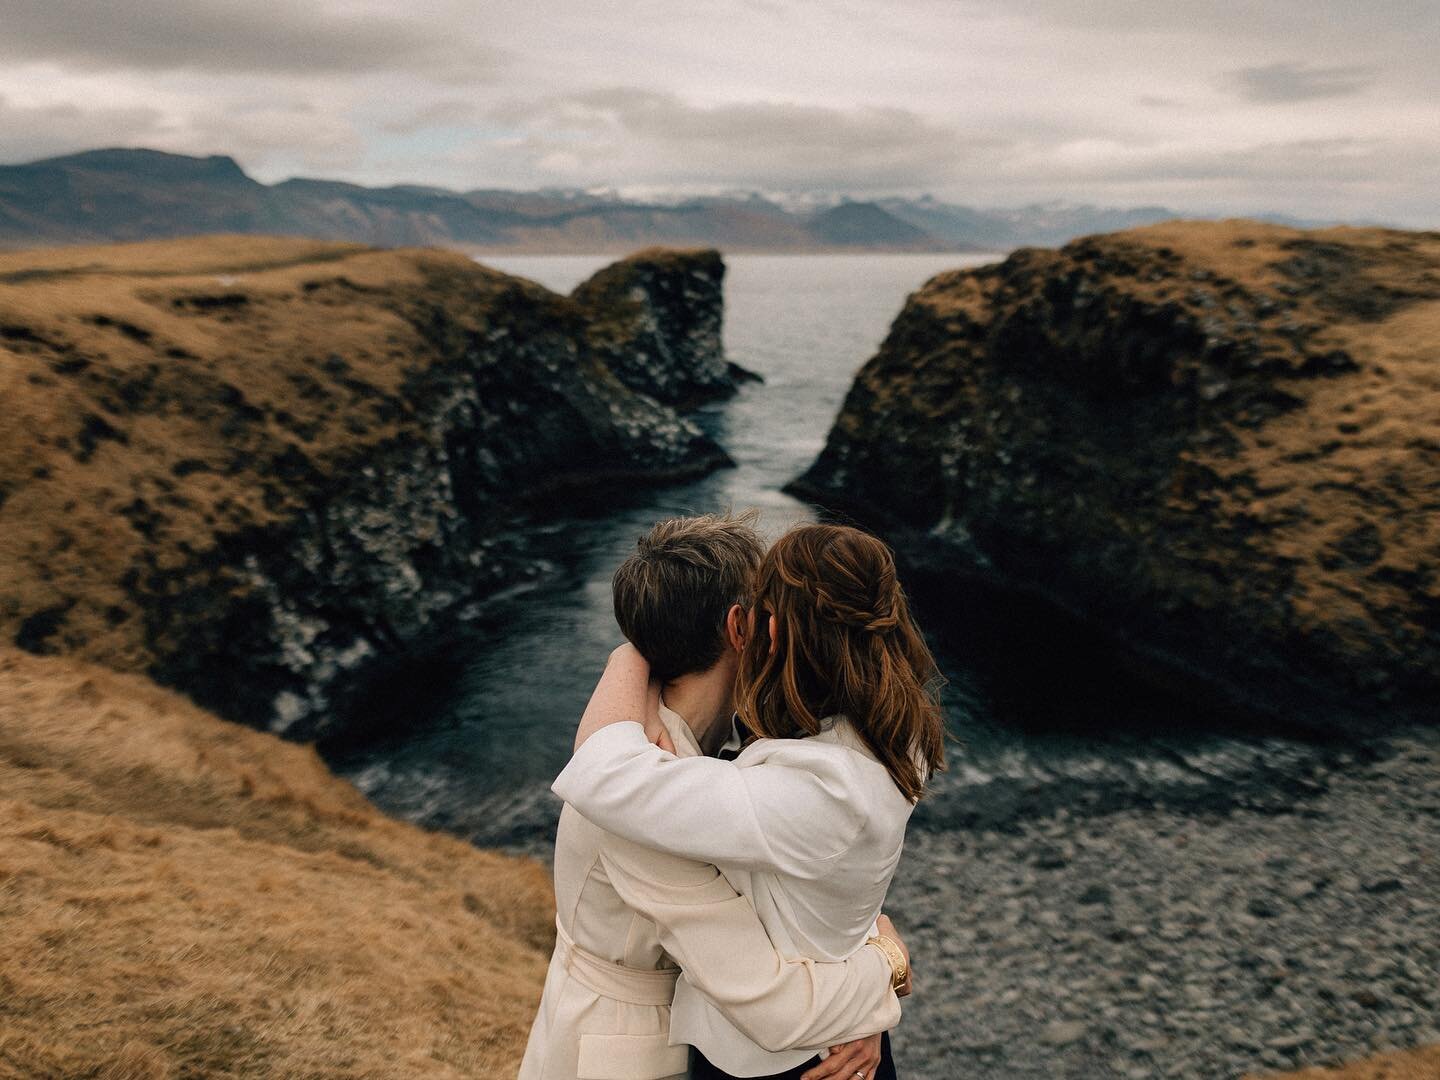 Stacey+Susie &amp; their beautiful Icelandic elopement.
-
Planned by @pinkiceland @valdivald 🙏

#gettingmarried #icelandwedding #equallywed #icelandlove